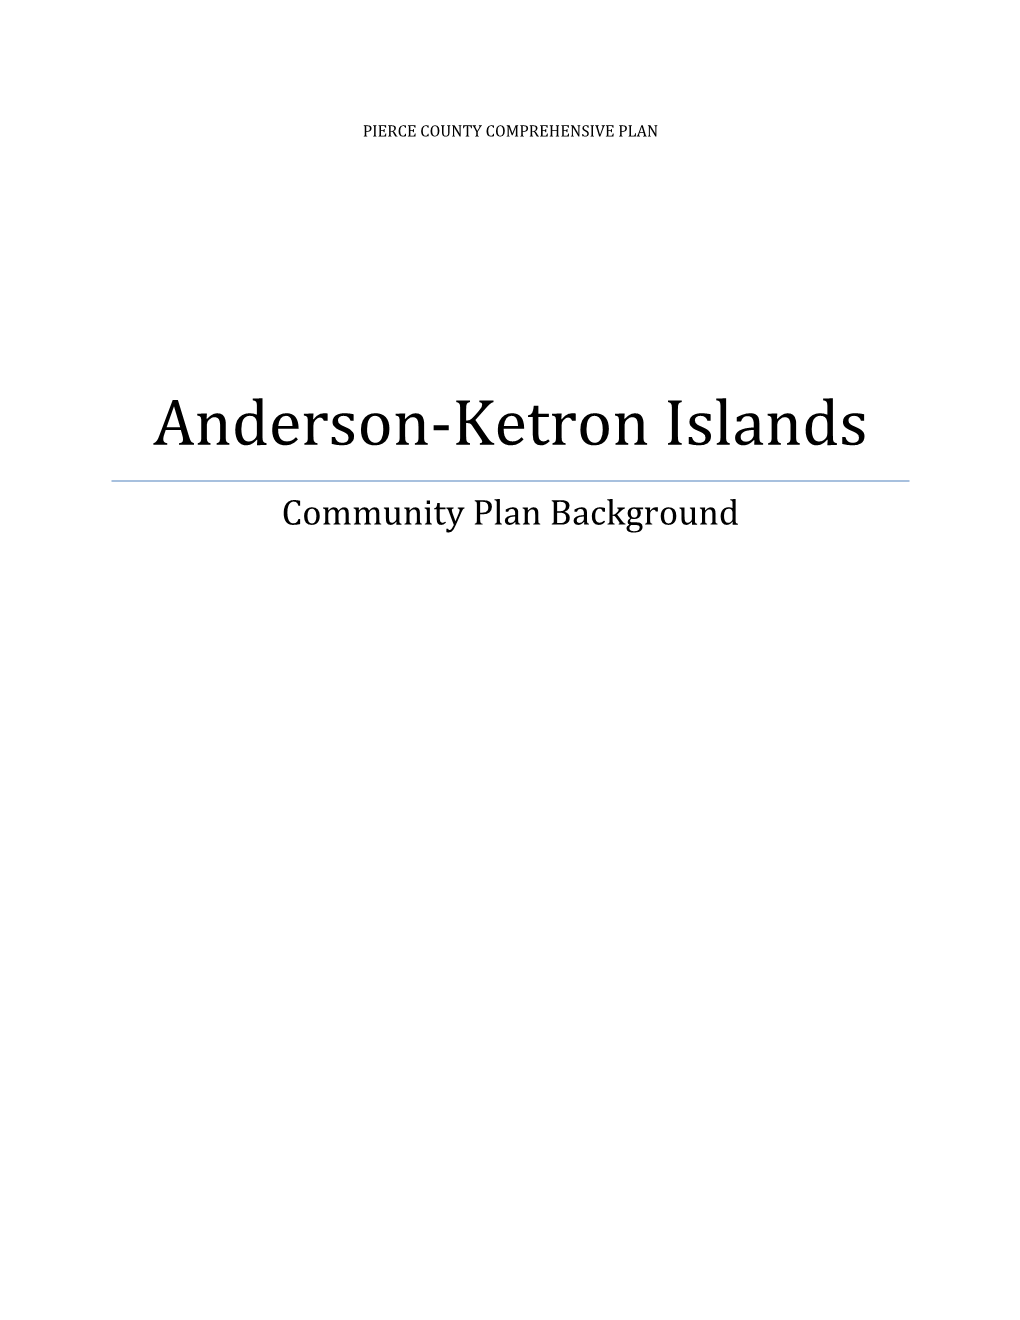 Anderson-Ketron Islands Community Plan Background